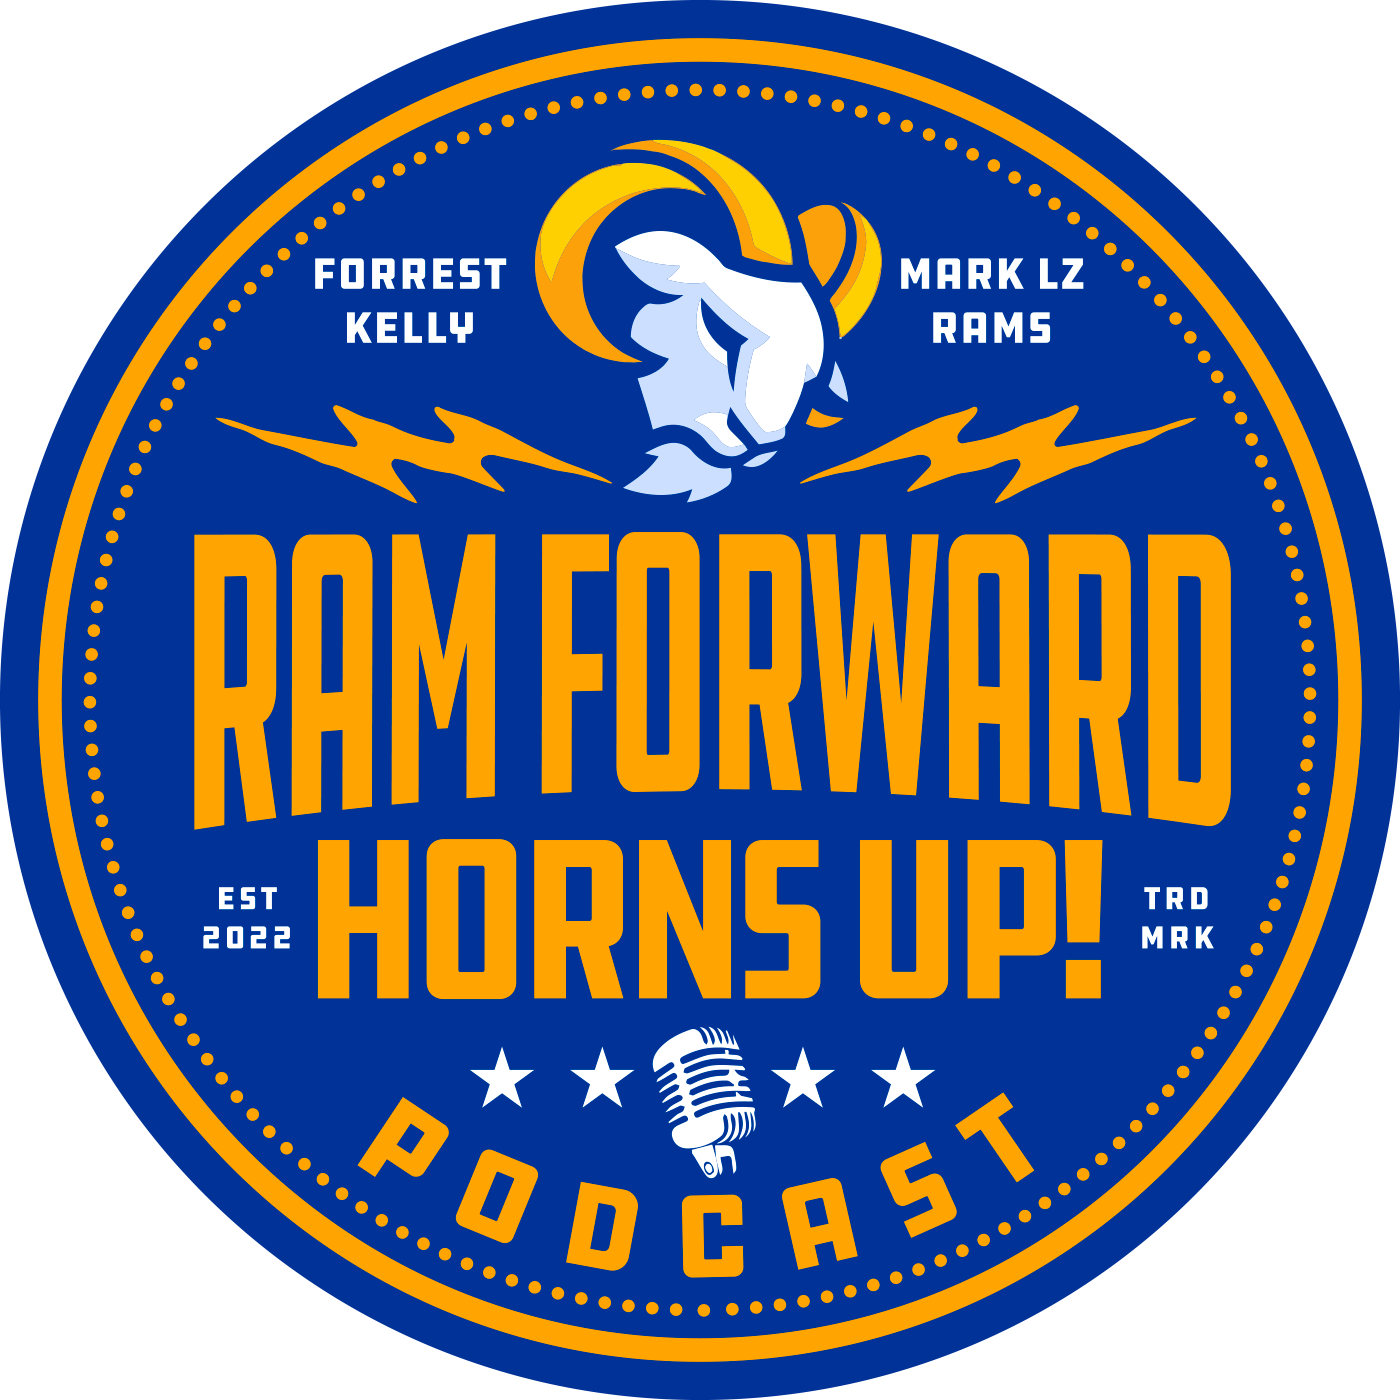 Ram Forward Horns Up!